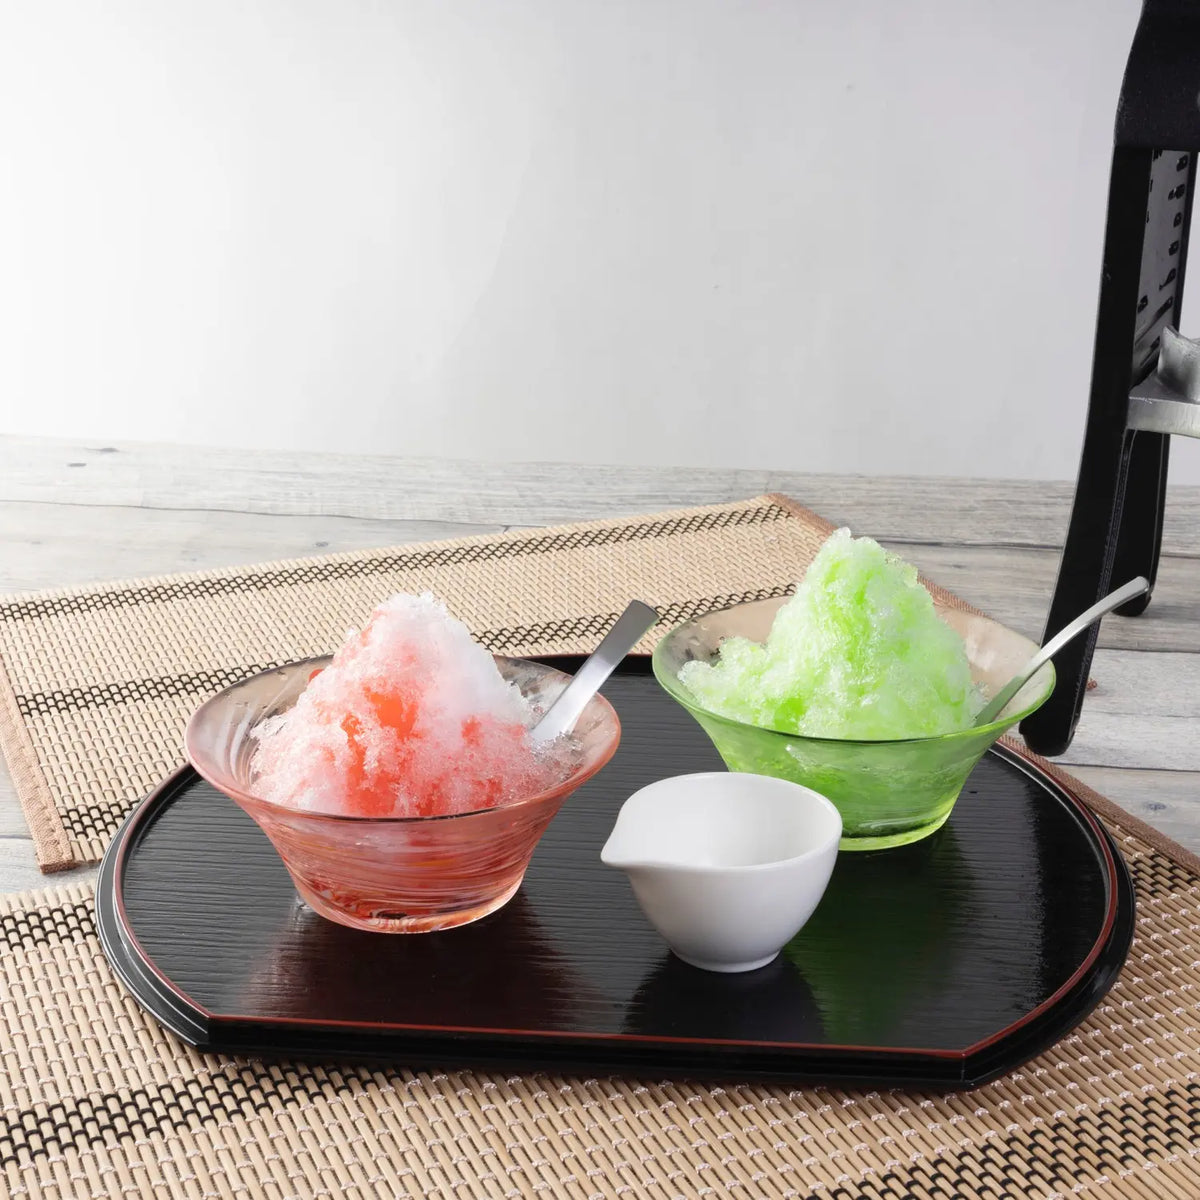 ADERIA Tsugaru Vidro Soda-Lime Glass Shaori Medium Bowl